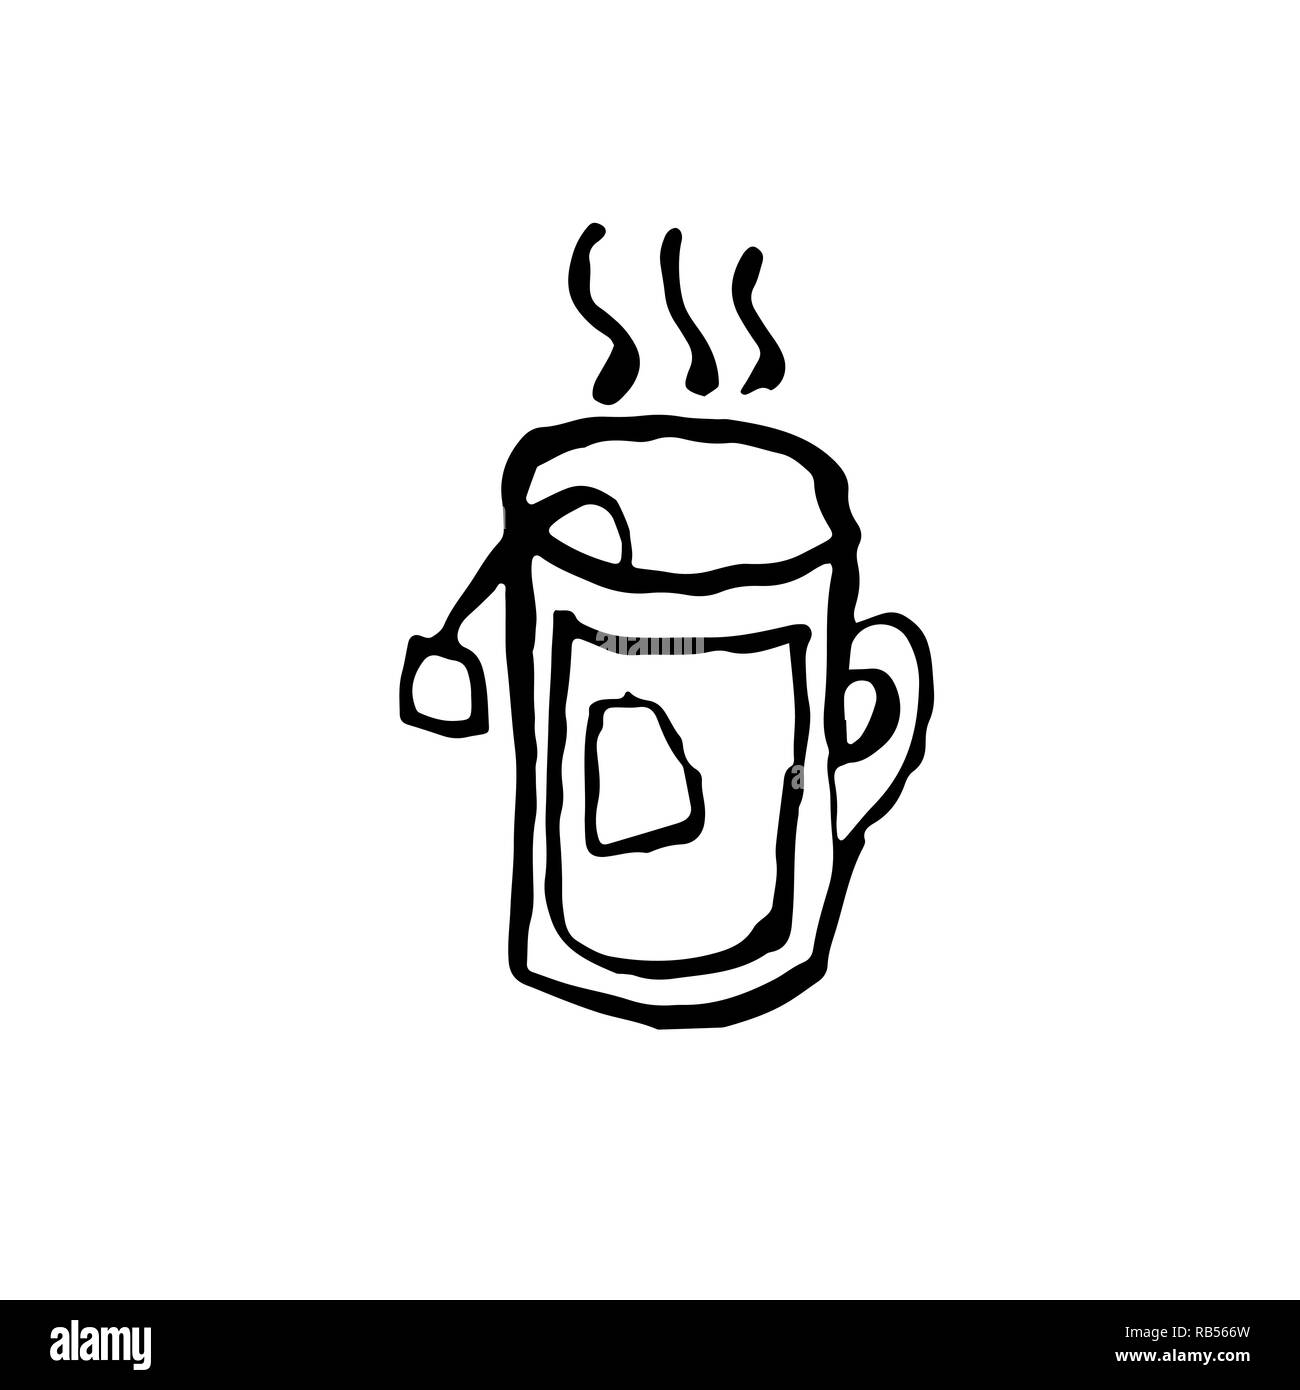 Il tè caldo cup icona grunge. Pacchetto Tè illustrazione vettoriale. Illustrazione Vettoriale